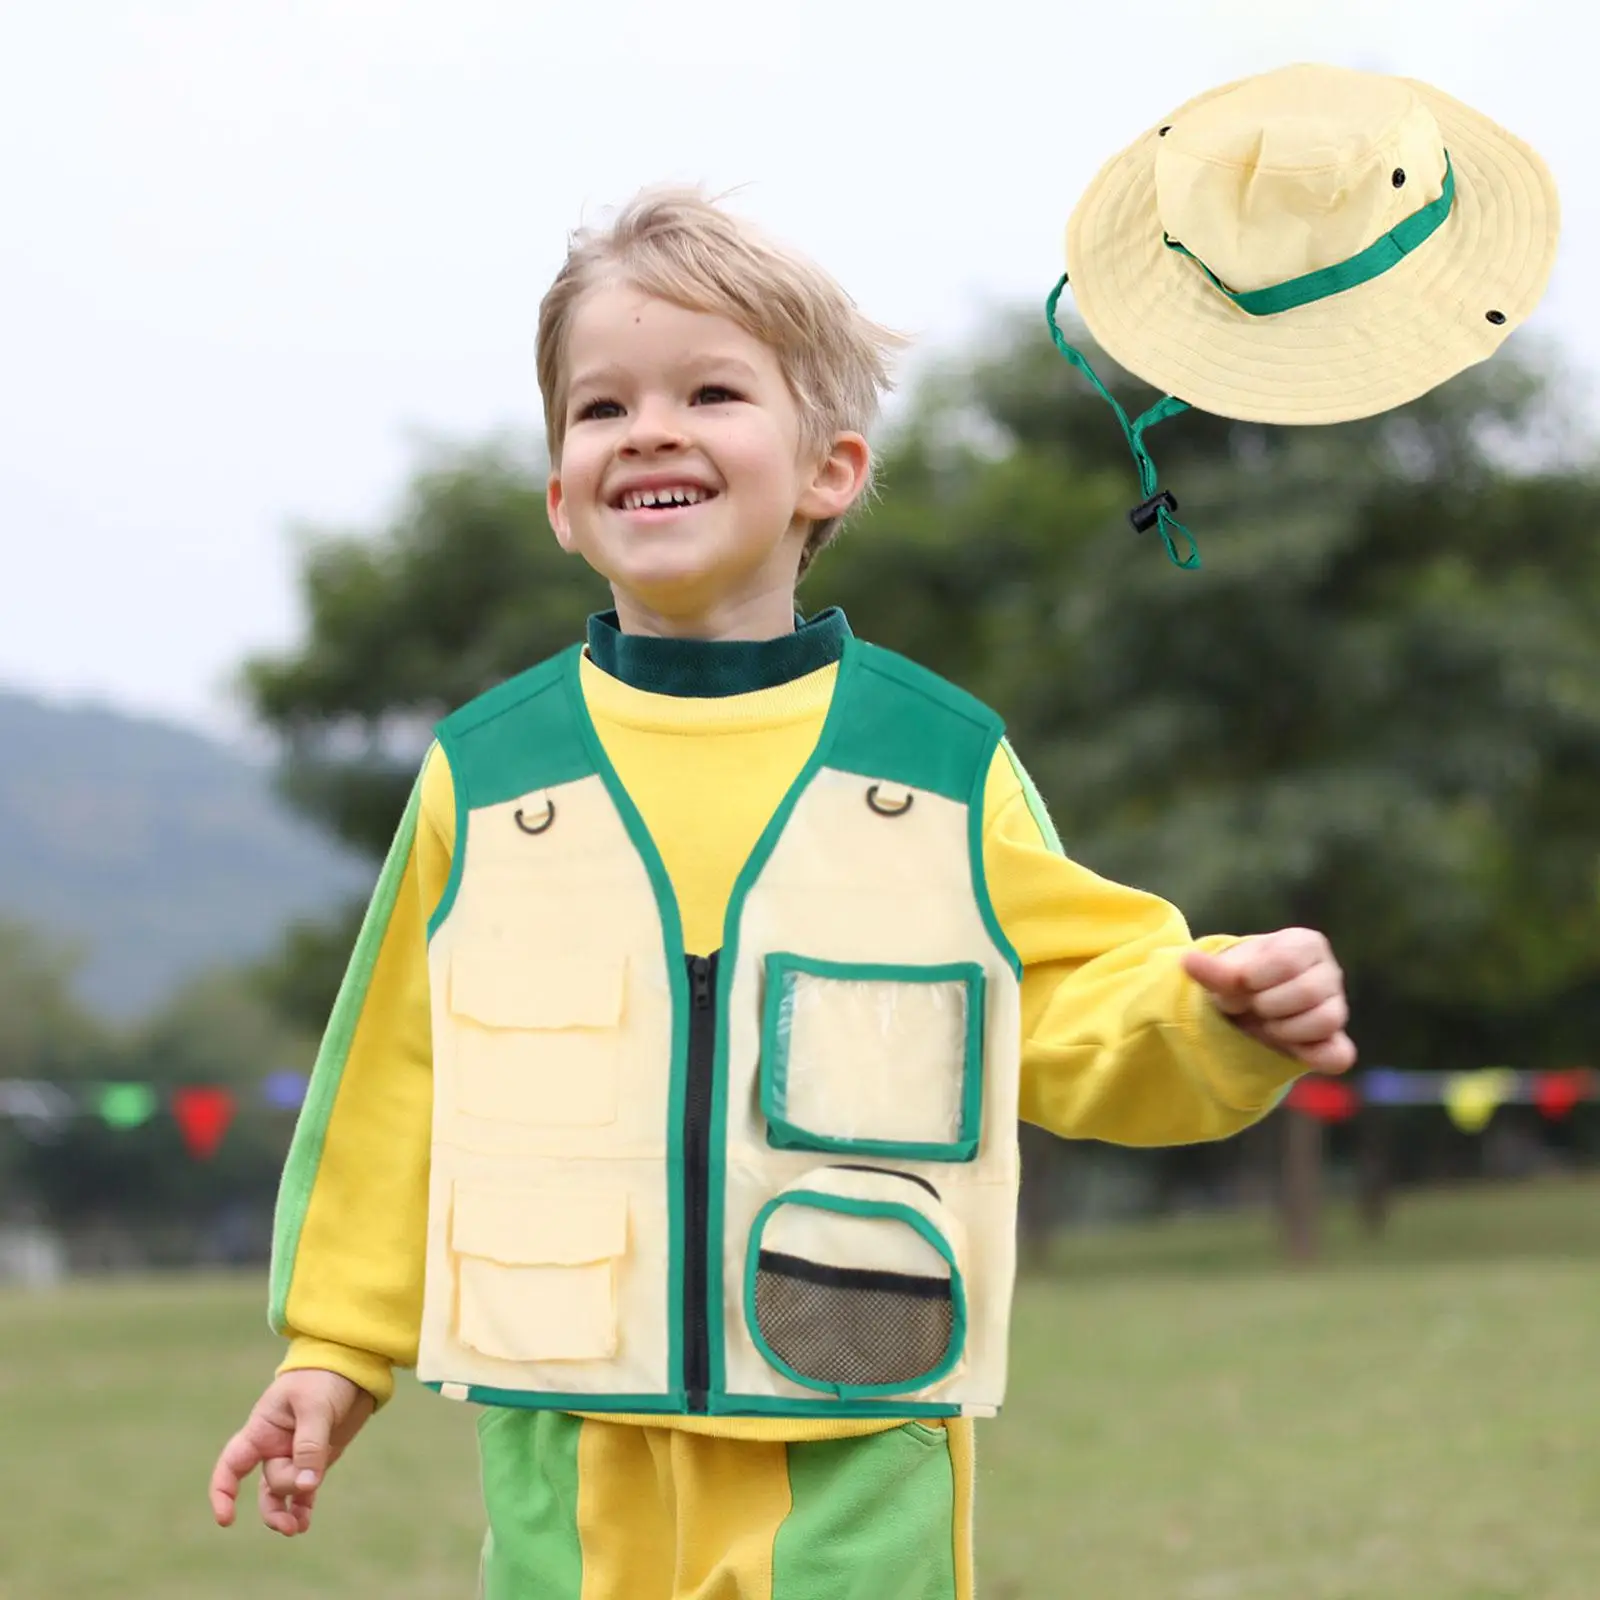 Kids Explorer Costume Kit Vest Hat Set Cosplay Costumes for Children